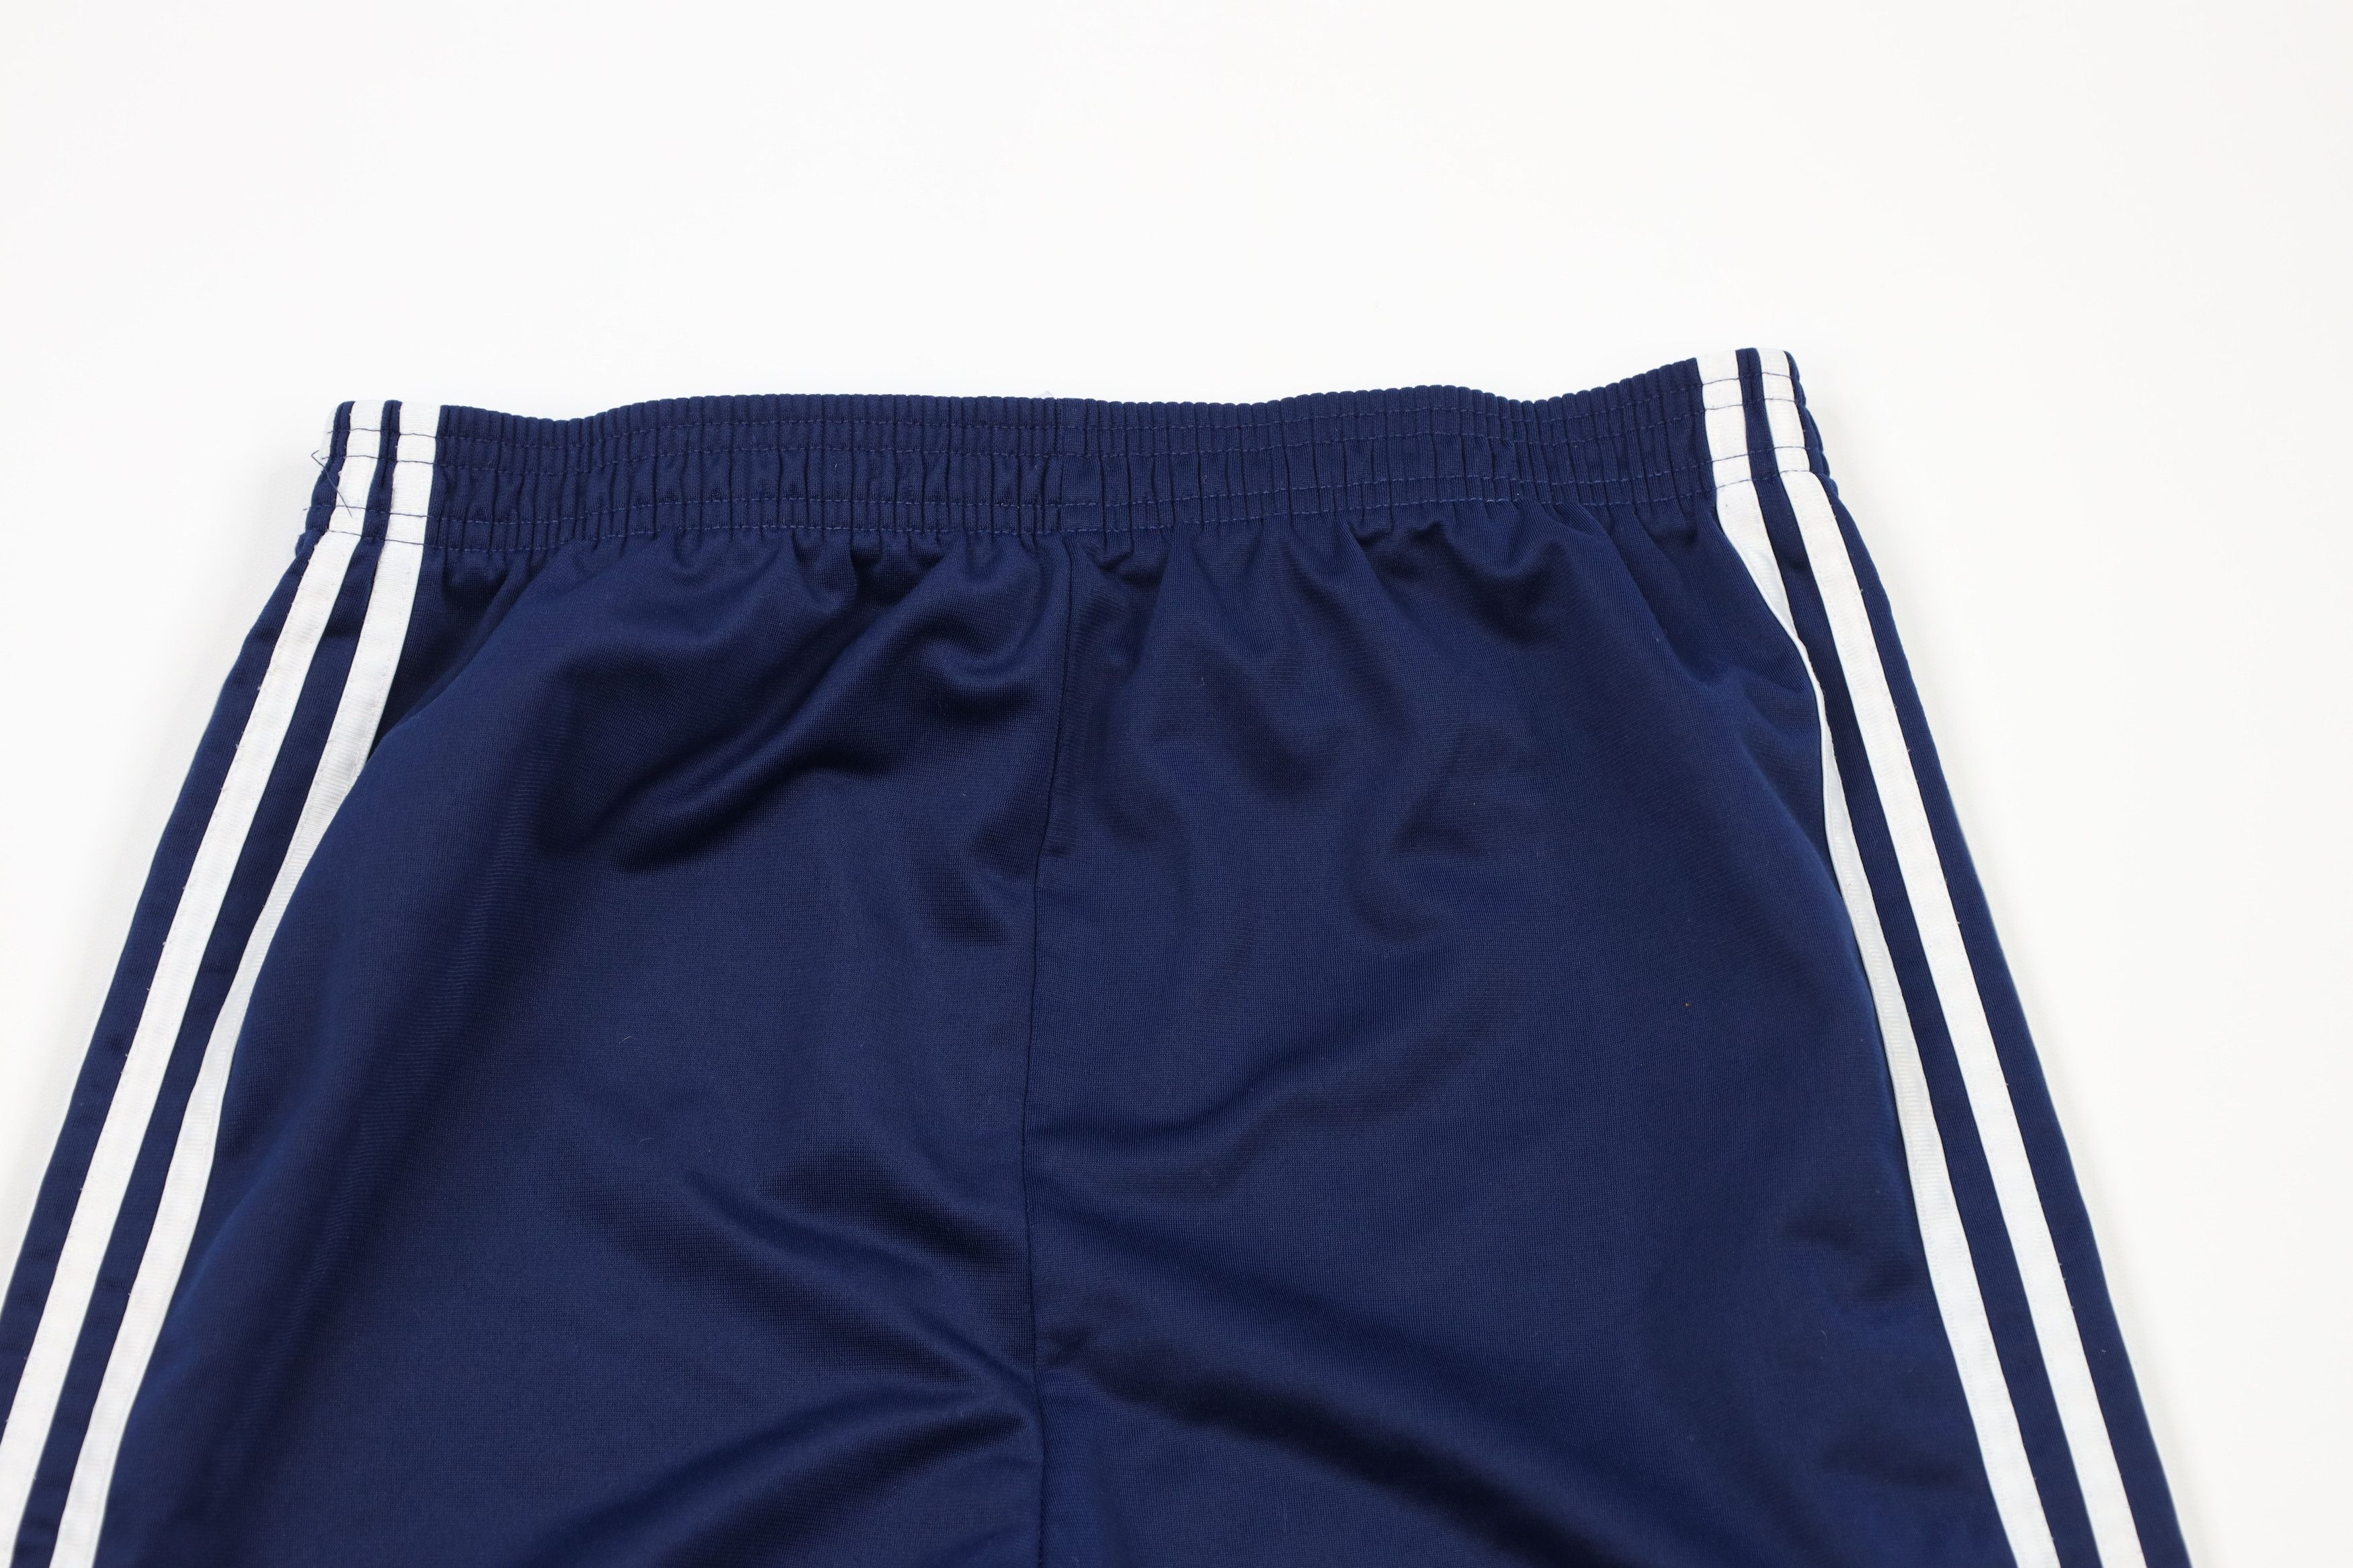 Adidas Vintage 90s Adidas Striped Tearaway Sweatpants Pants Blue Size US 34 / EU 50 - 2 Preview